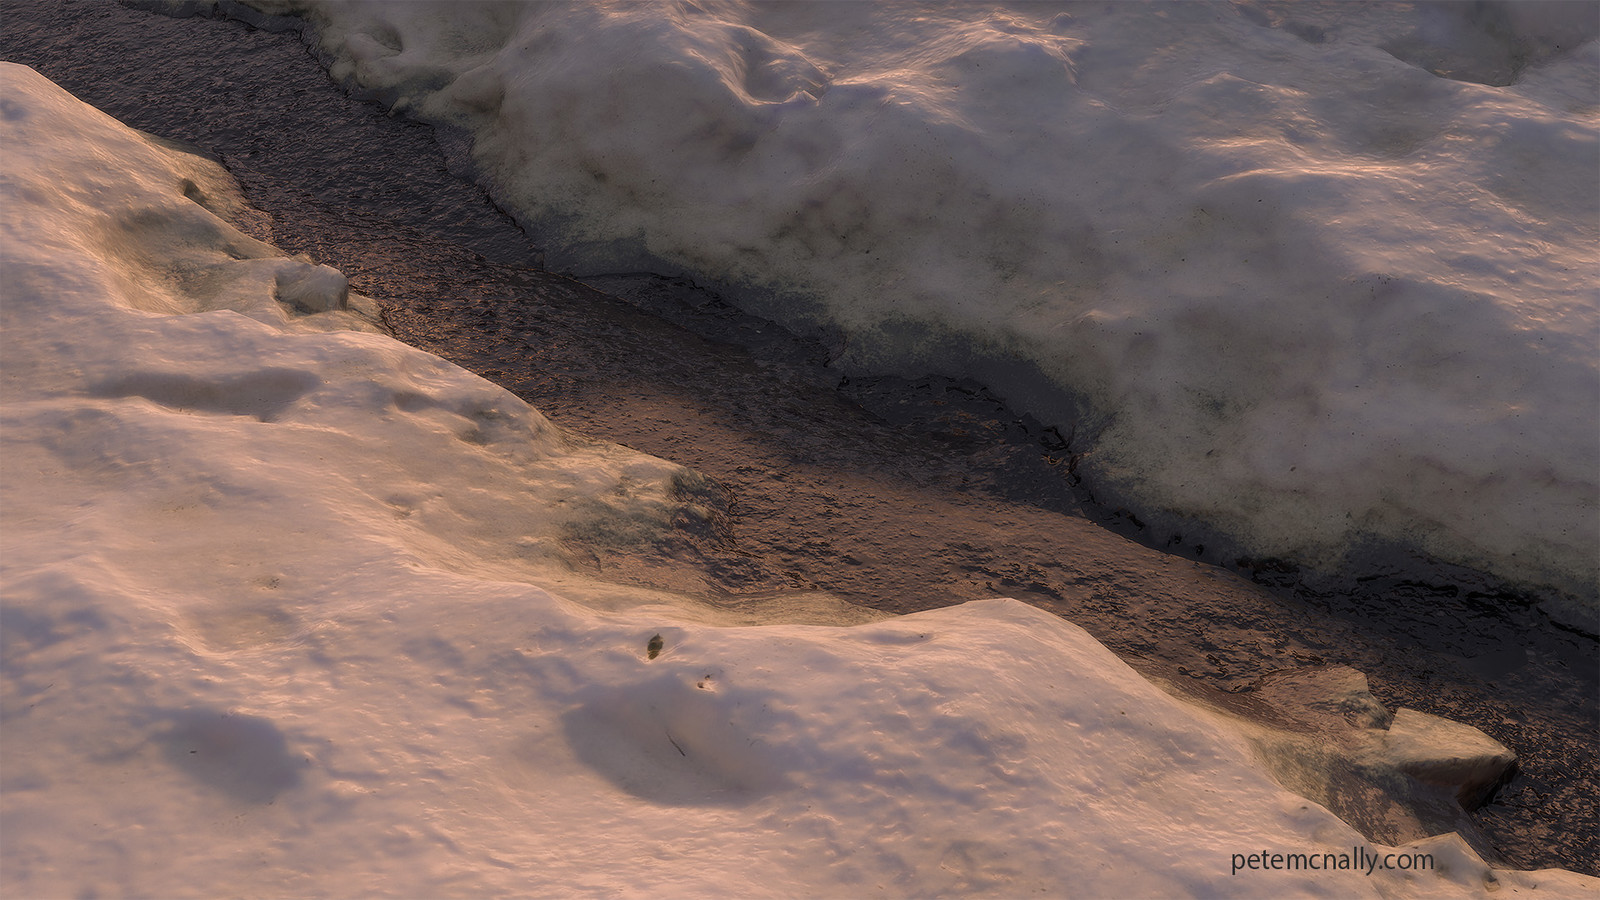 Slushy melting snow 03
Toolbag 3 render